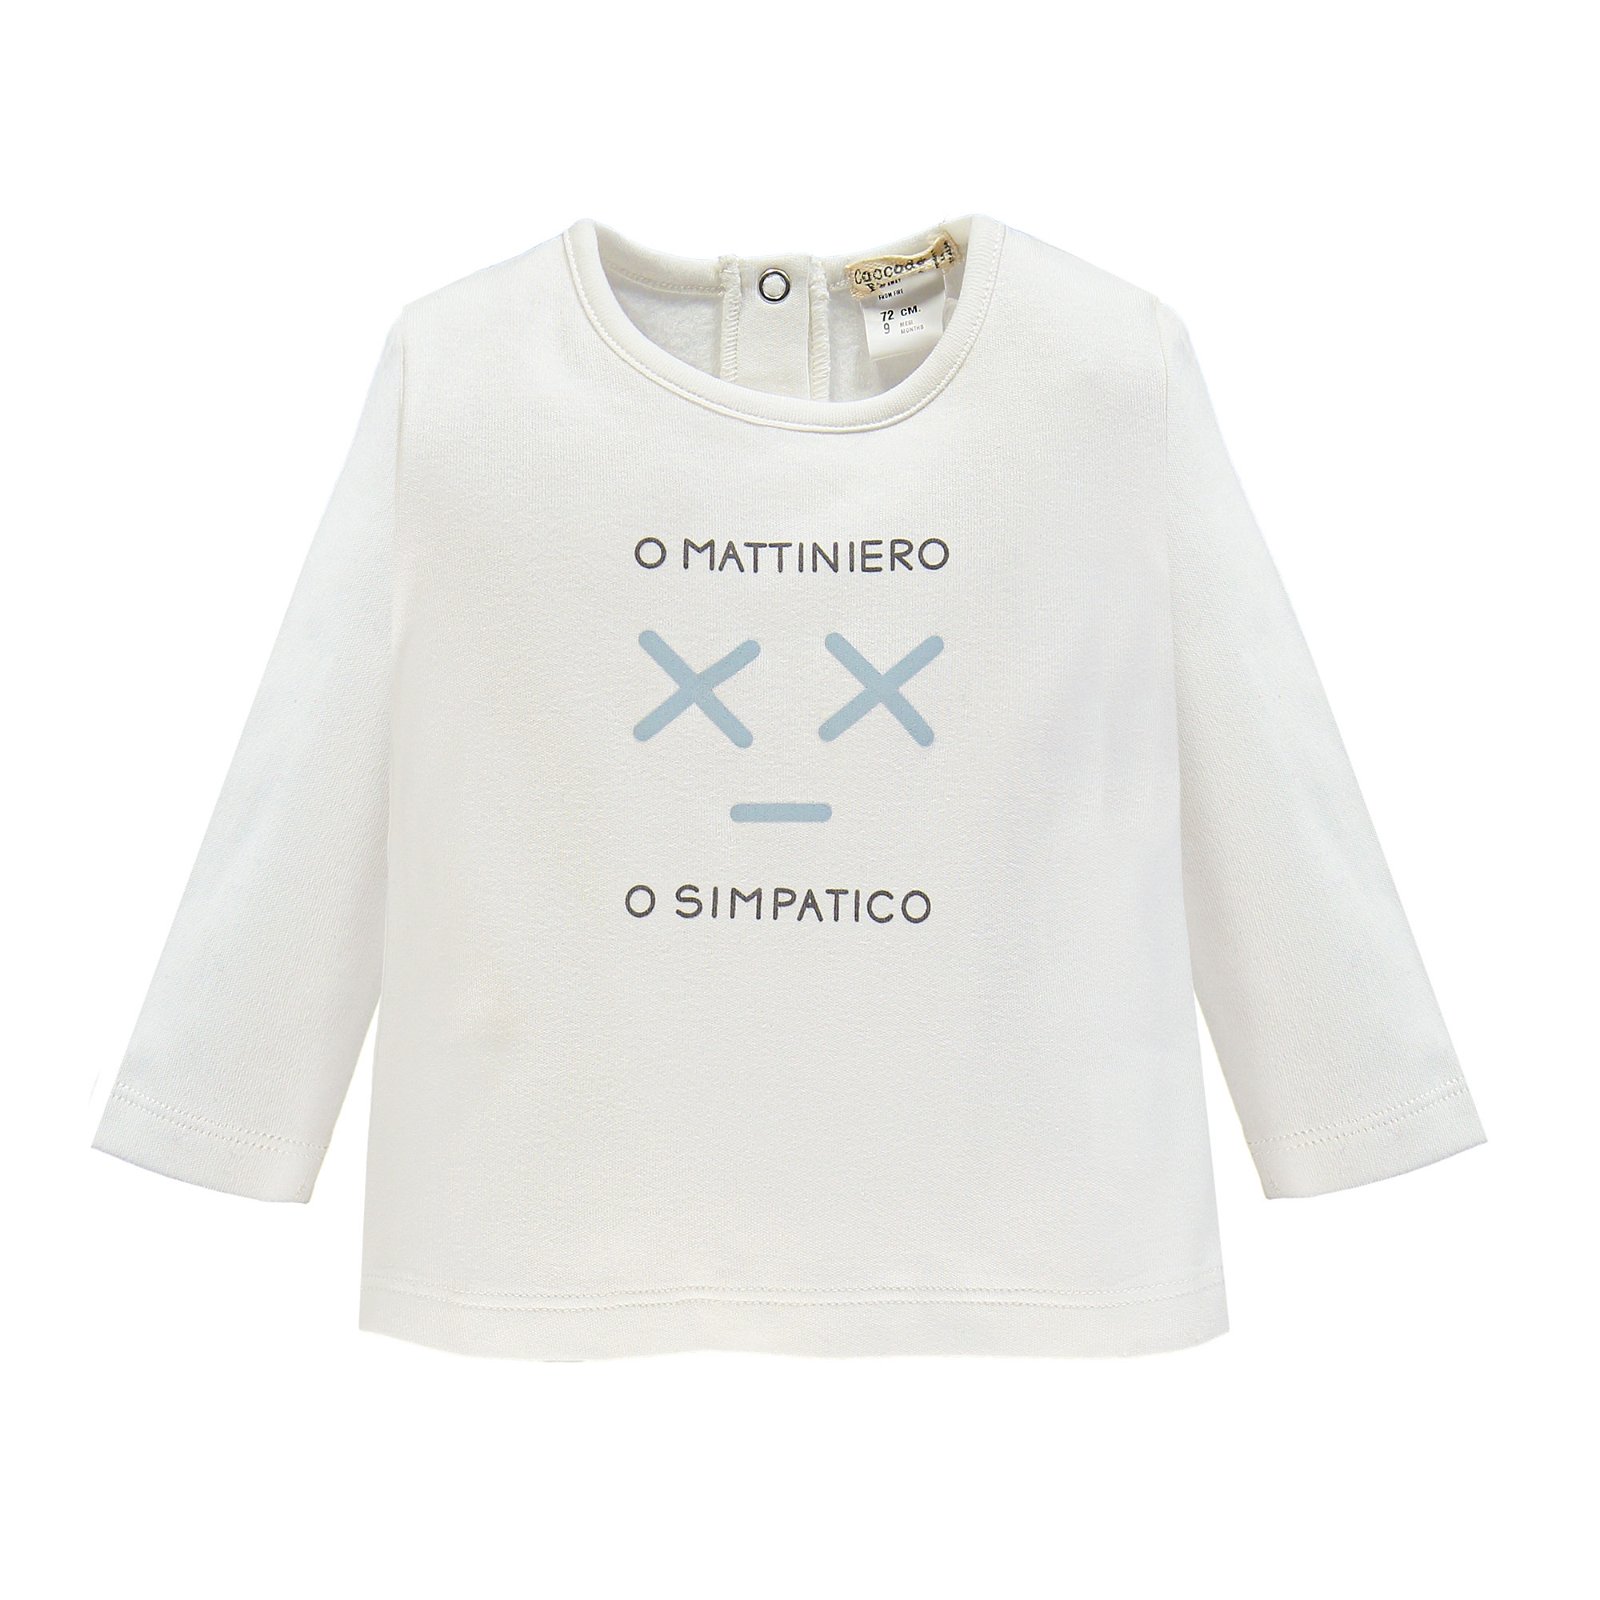 MODA BAMBINI Camicie & T-shirt Volant sconto 56% Zara Blusa Bianco 18-24M 